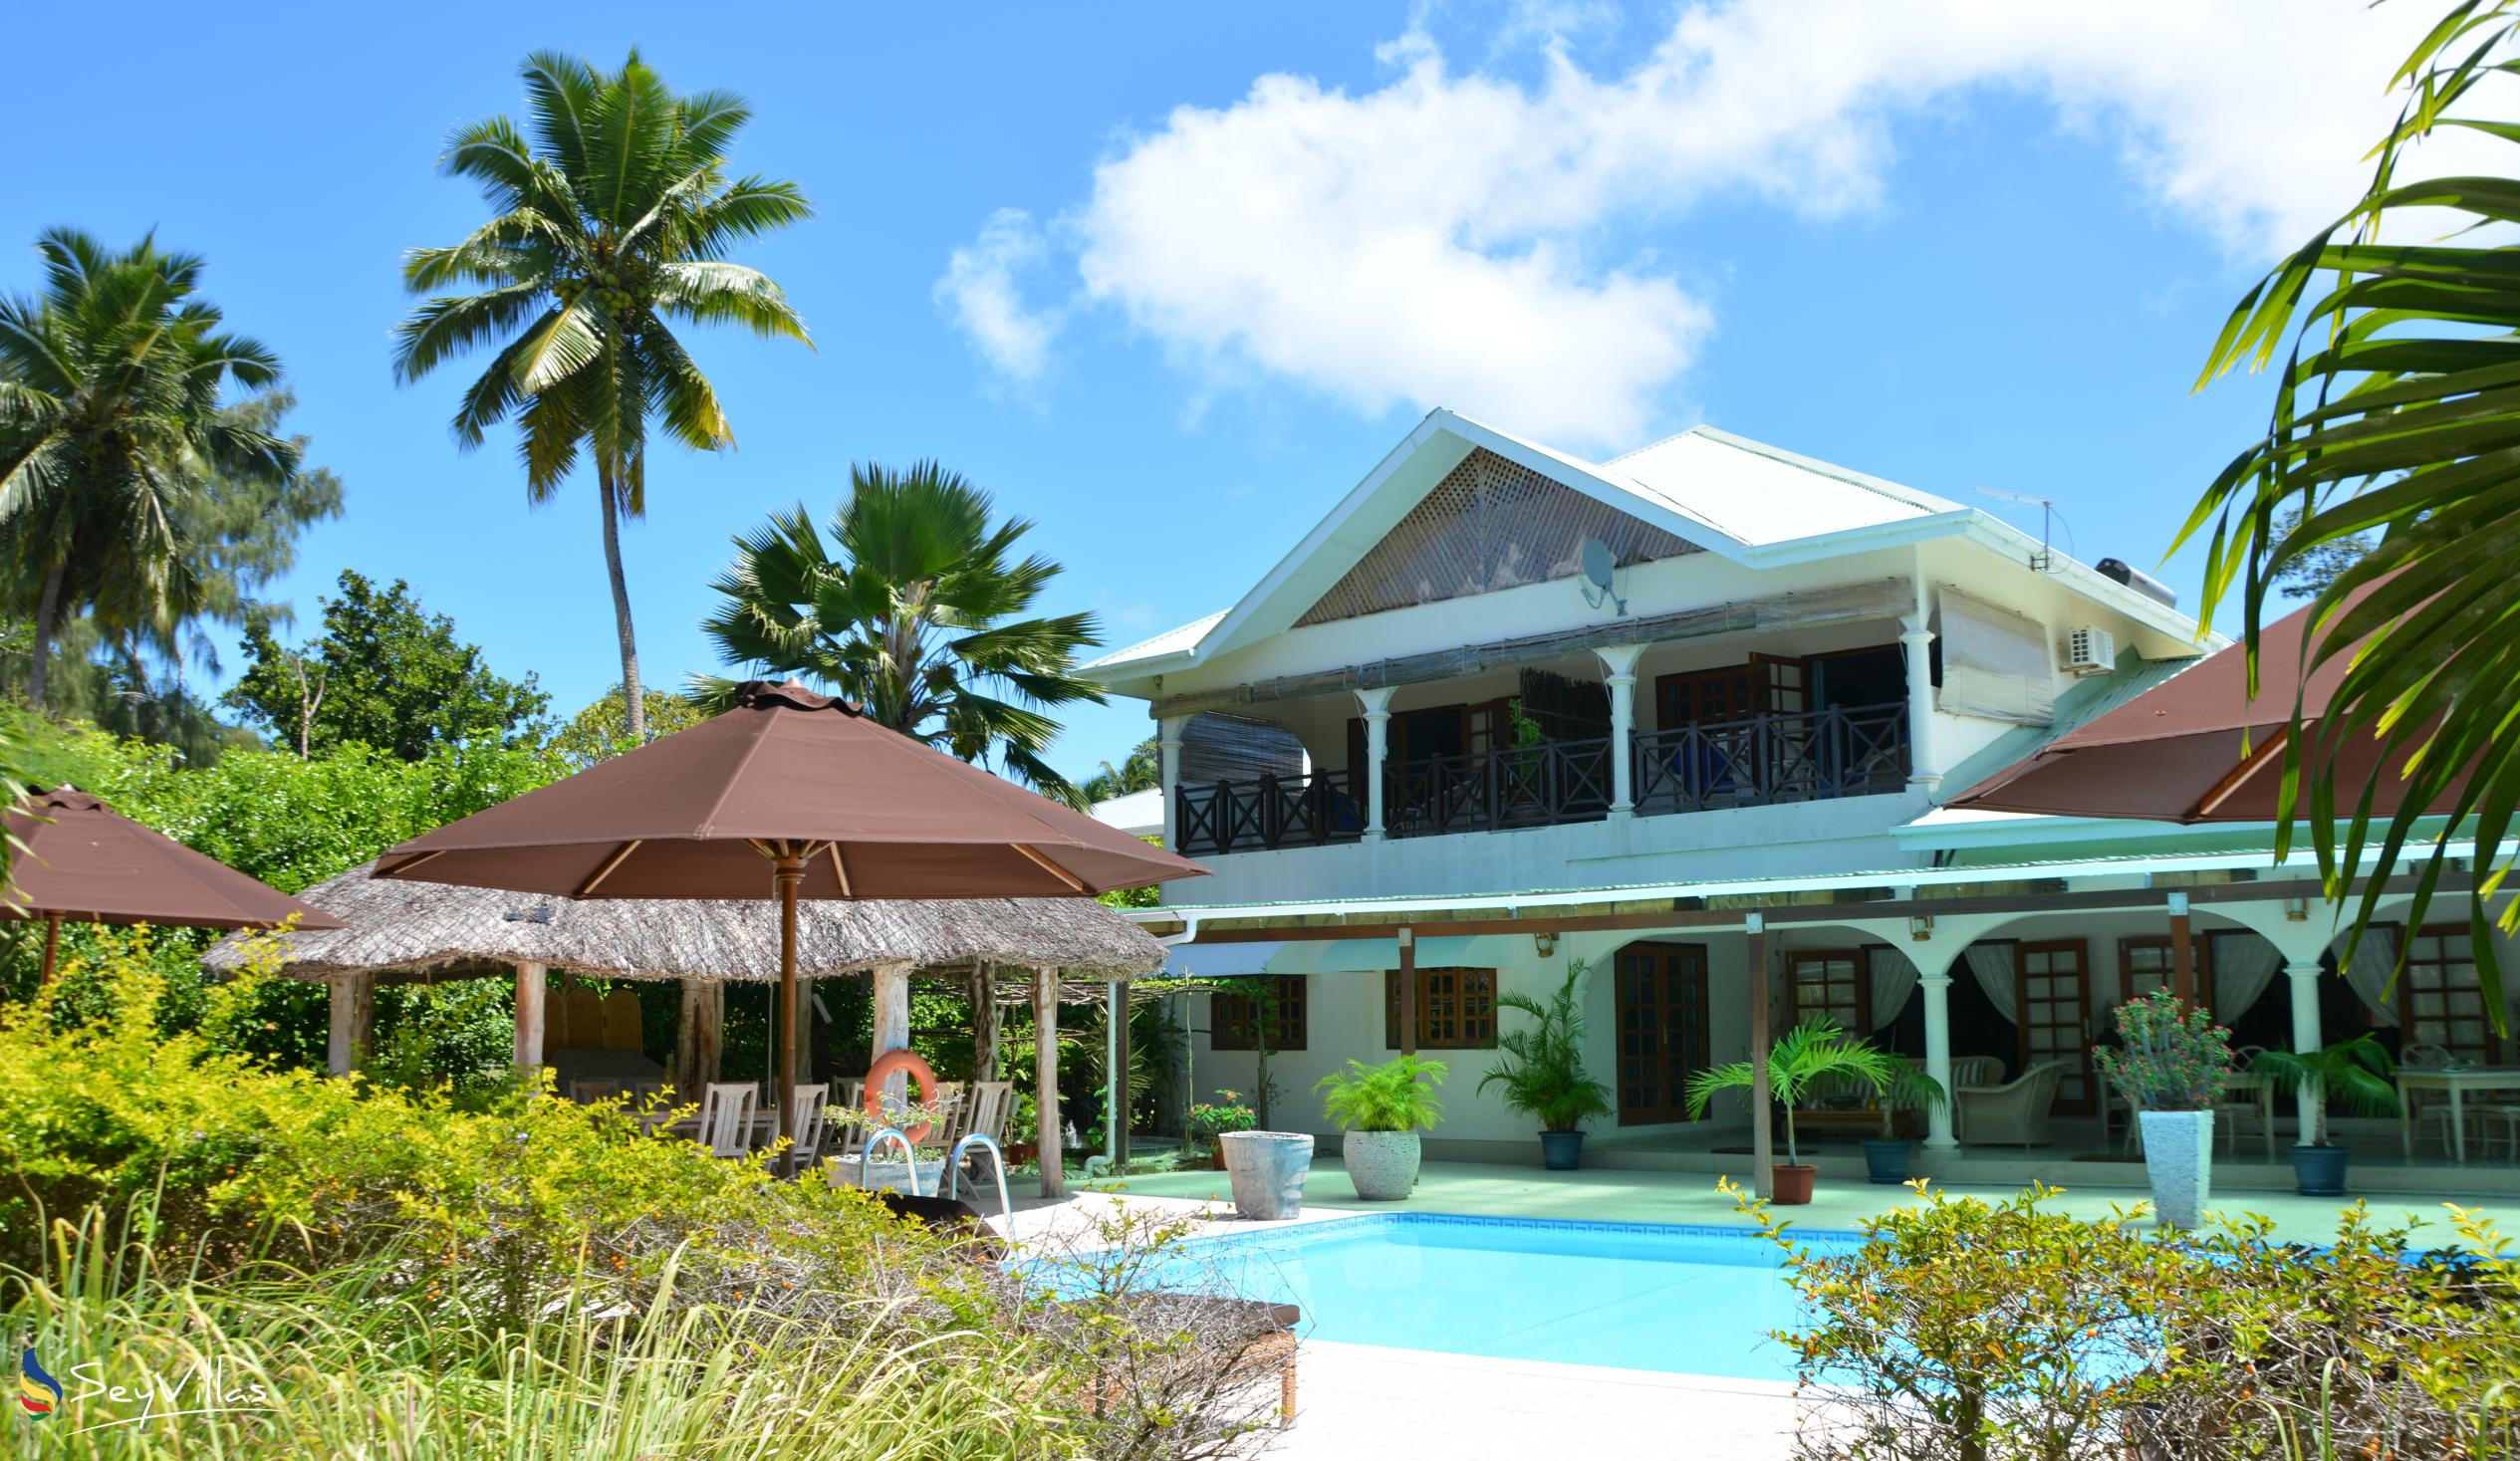 Photo 1: Villa de Cerf - Outdoor area - Cerf Island (Seychelles)